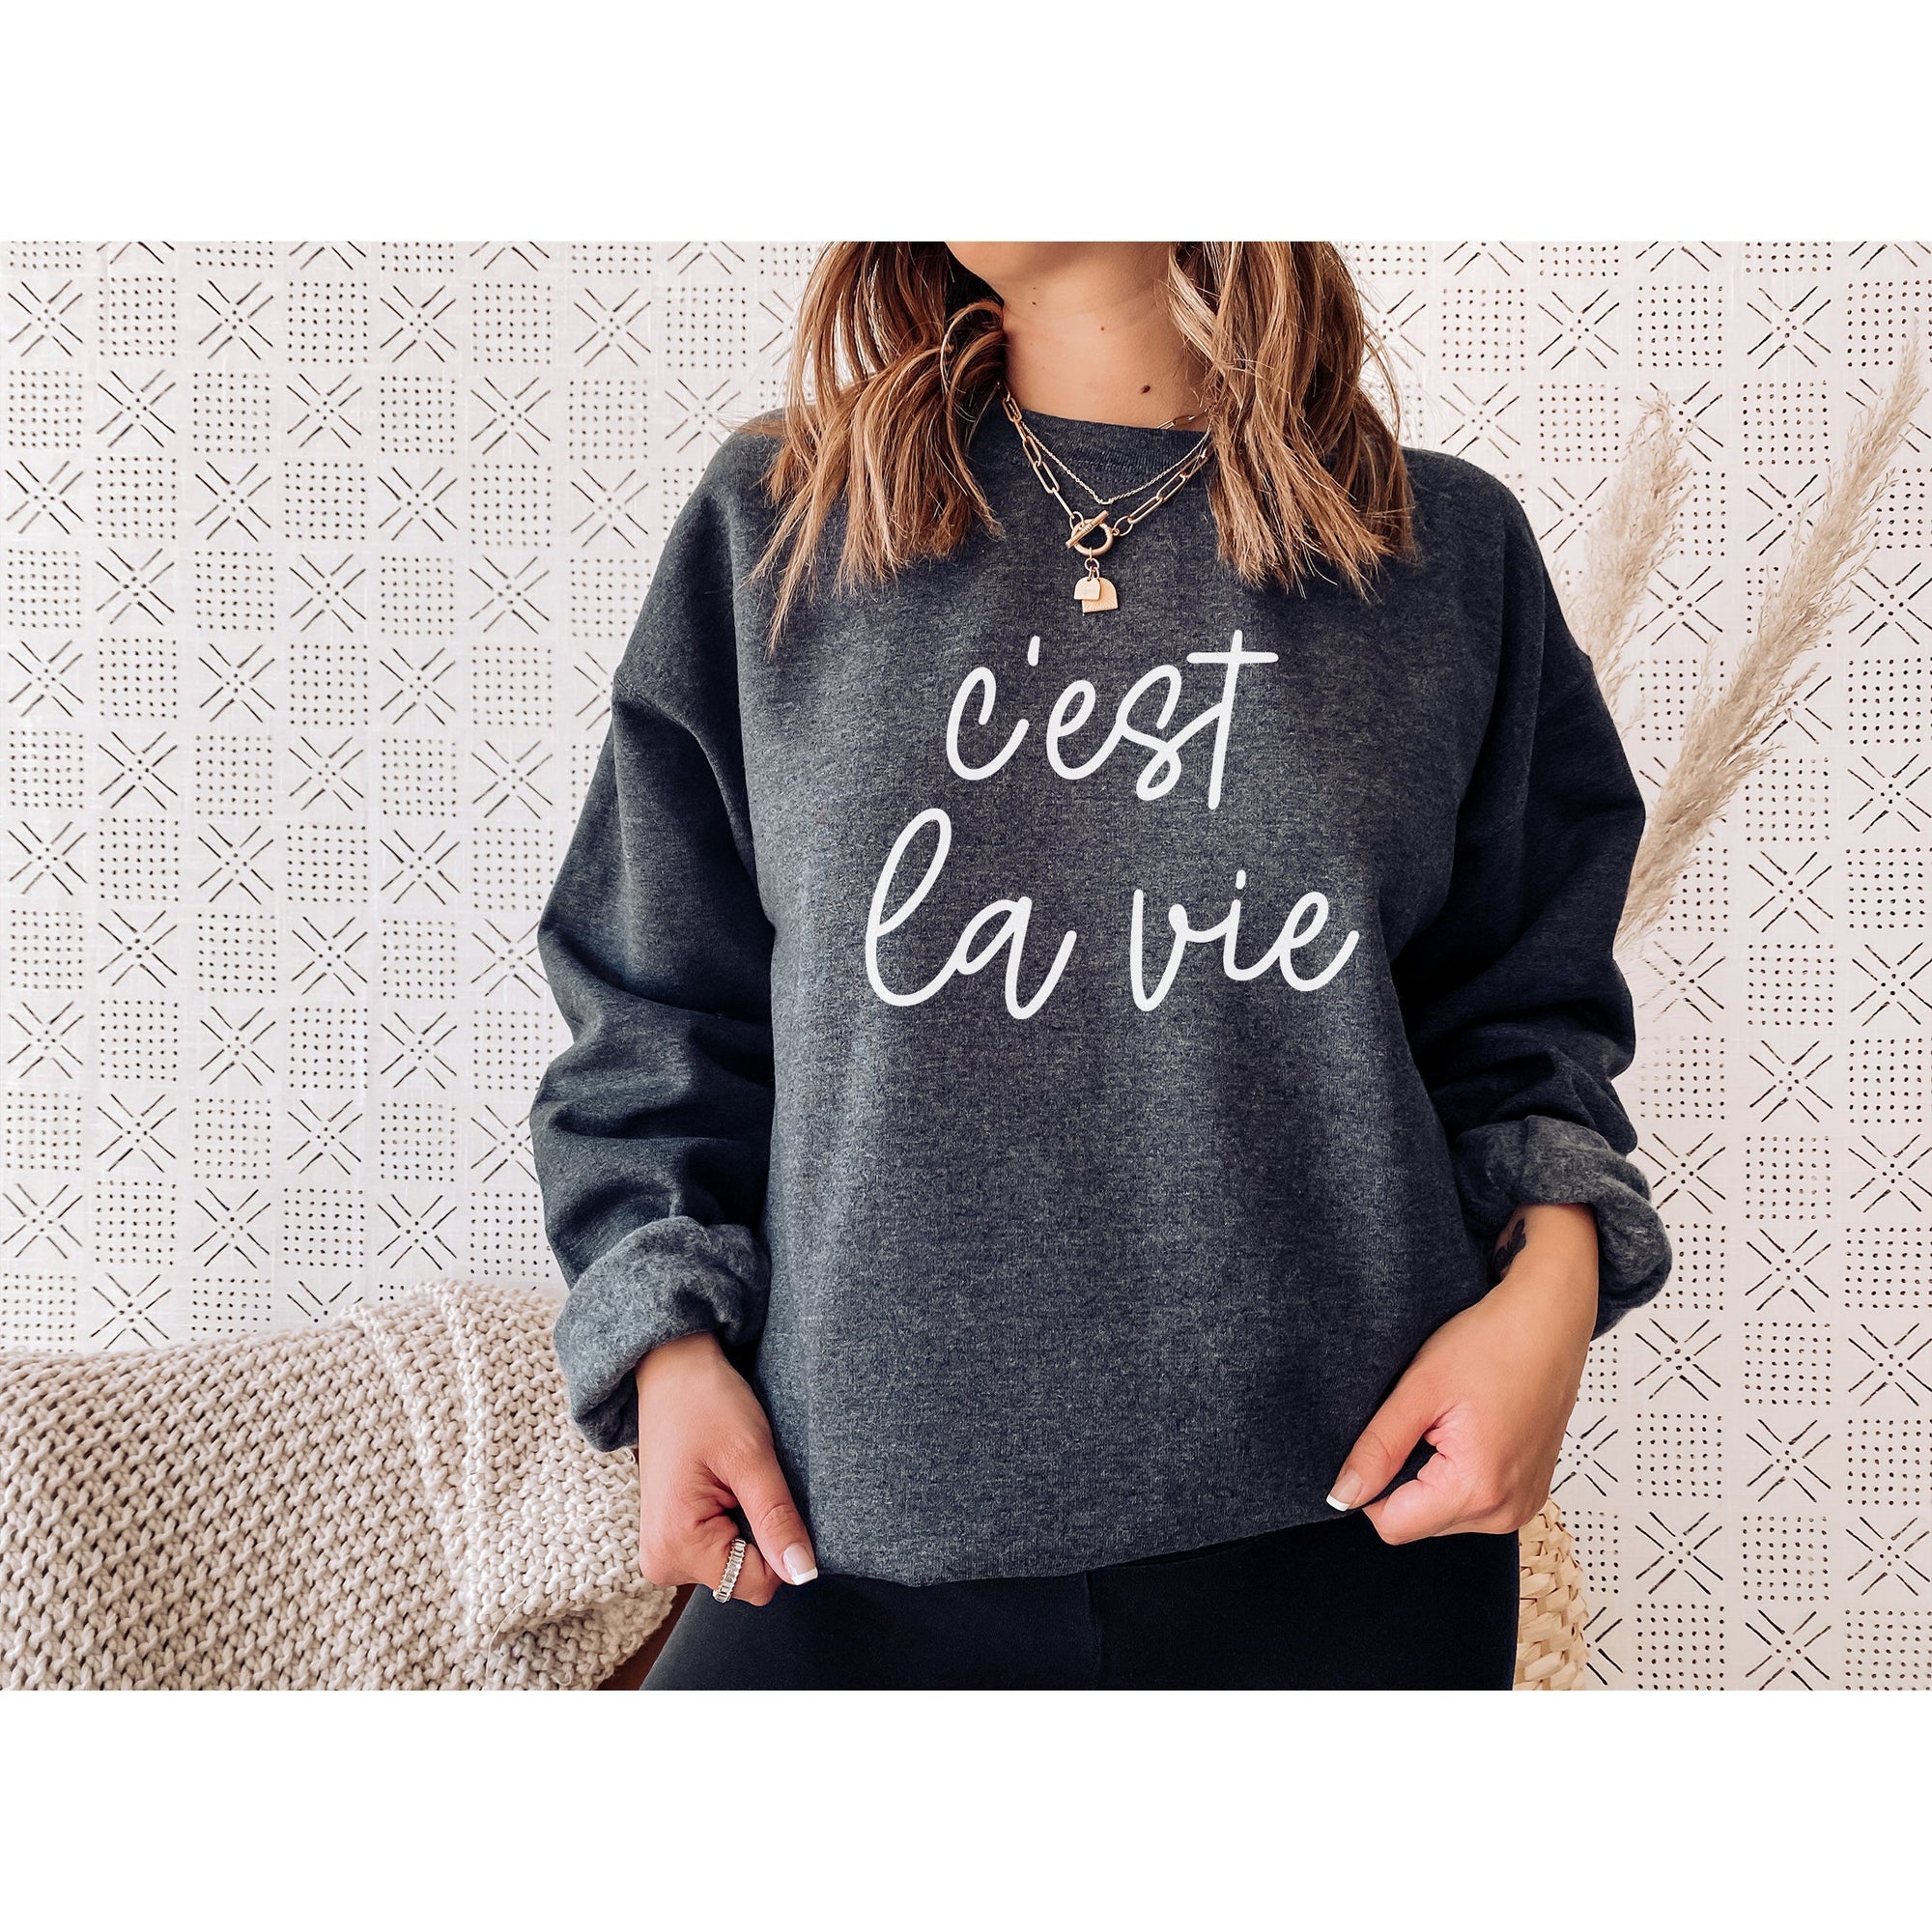 Ce Sweatshirt Est En Vente: Grab This French Sale Today!